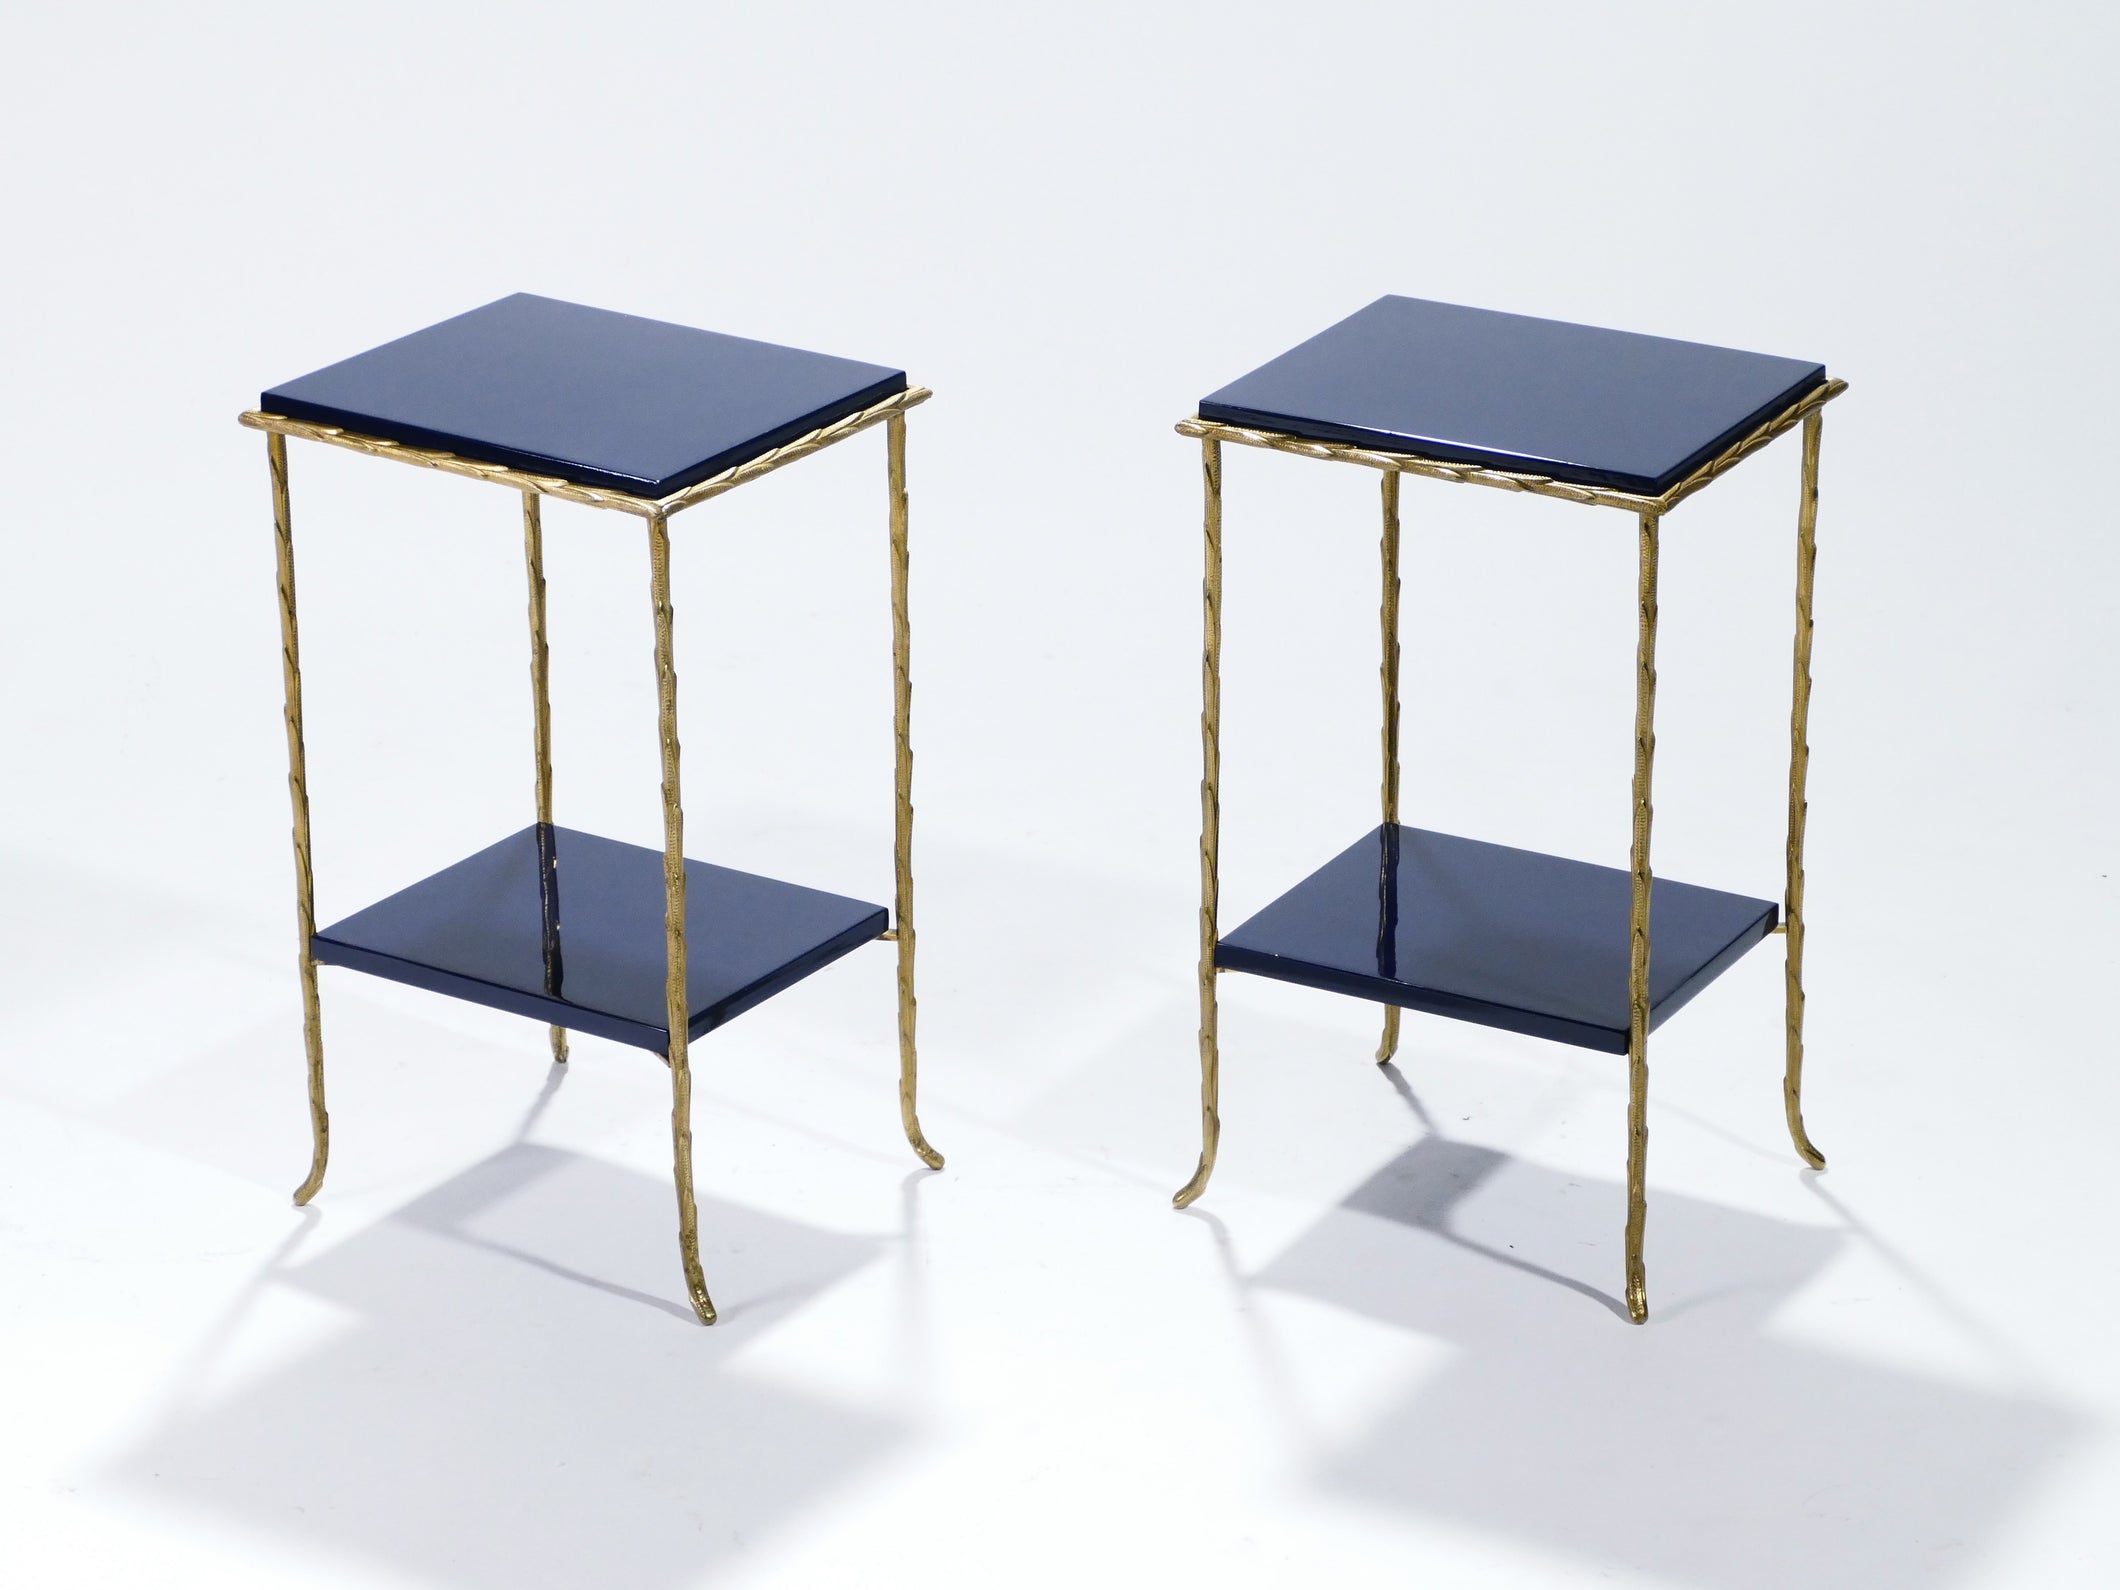 Bronze faux bamboo side tables by Maison Baguès 1960's